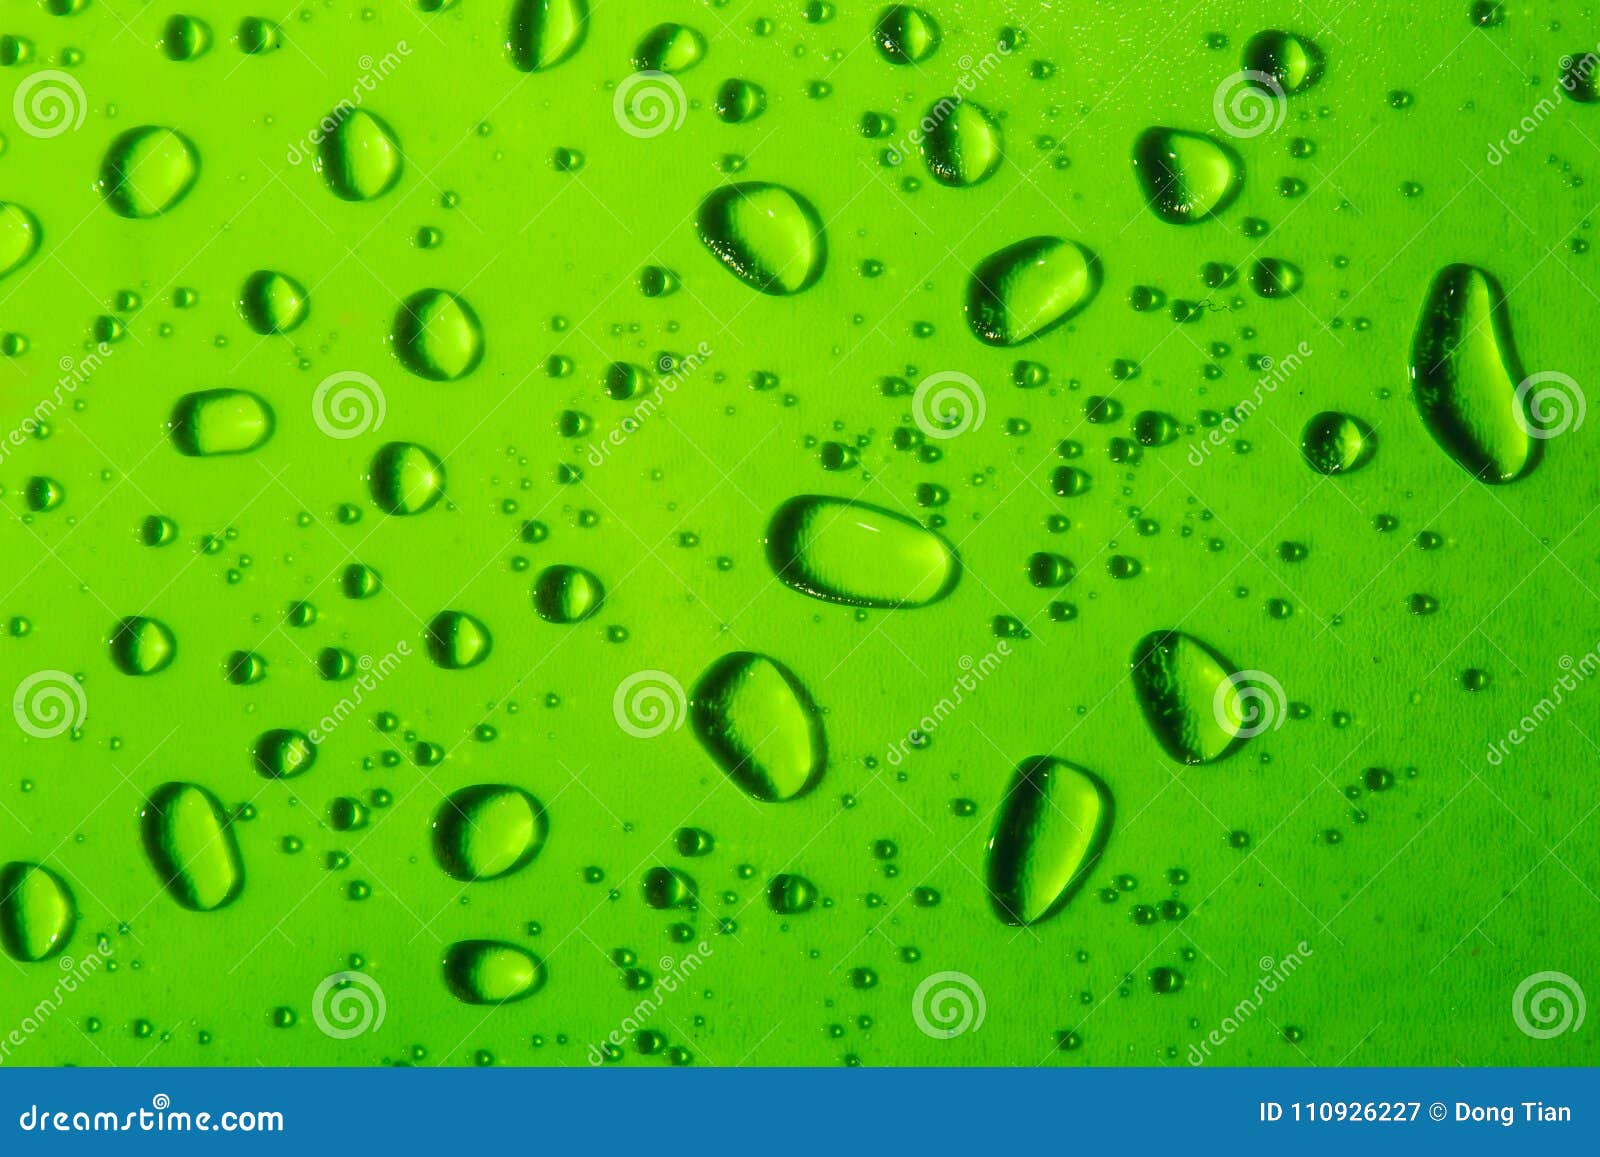 Green bubble stock image. Image of bright, phenomena - 110926227